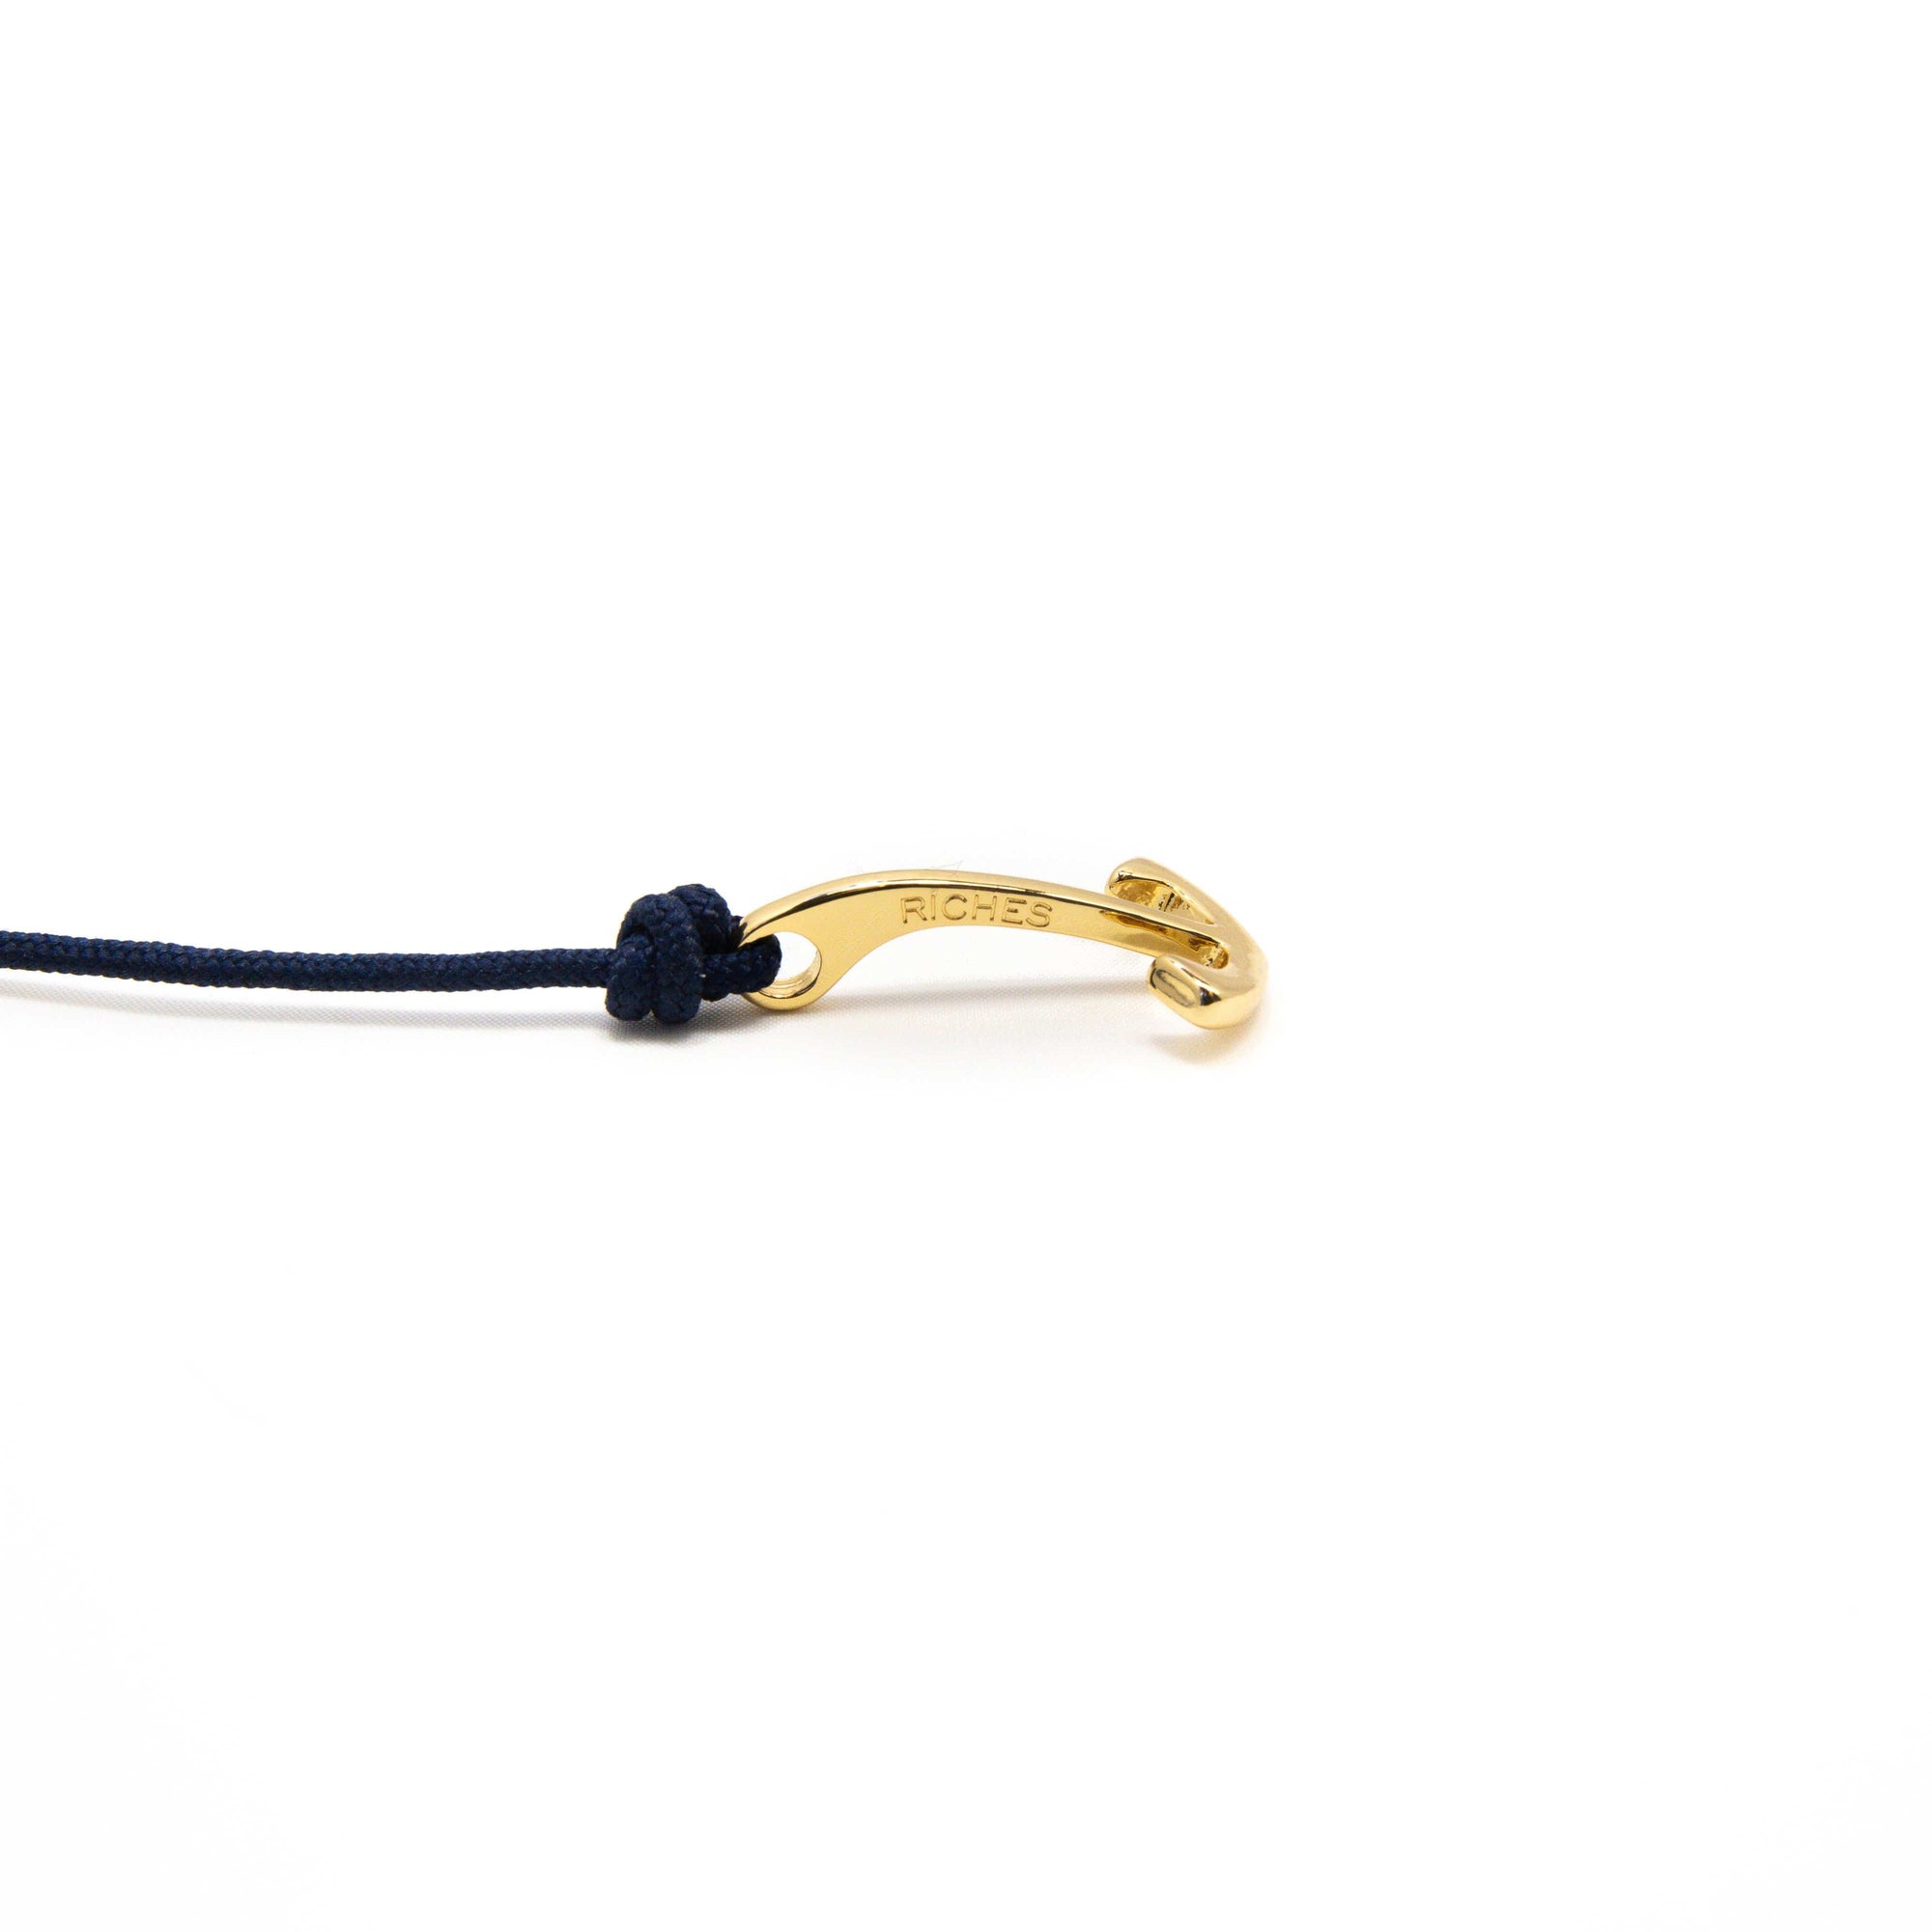 Adjustable anchor bracelet, gold-Wrist Wear-Stolen Riches / CA